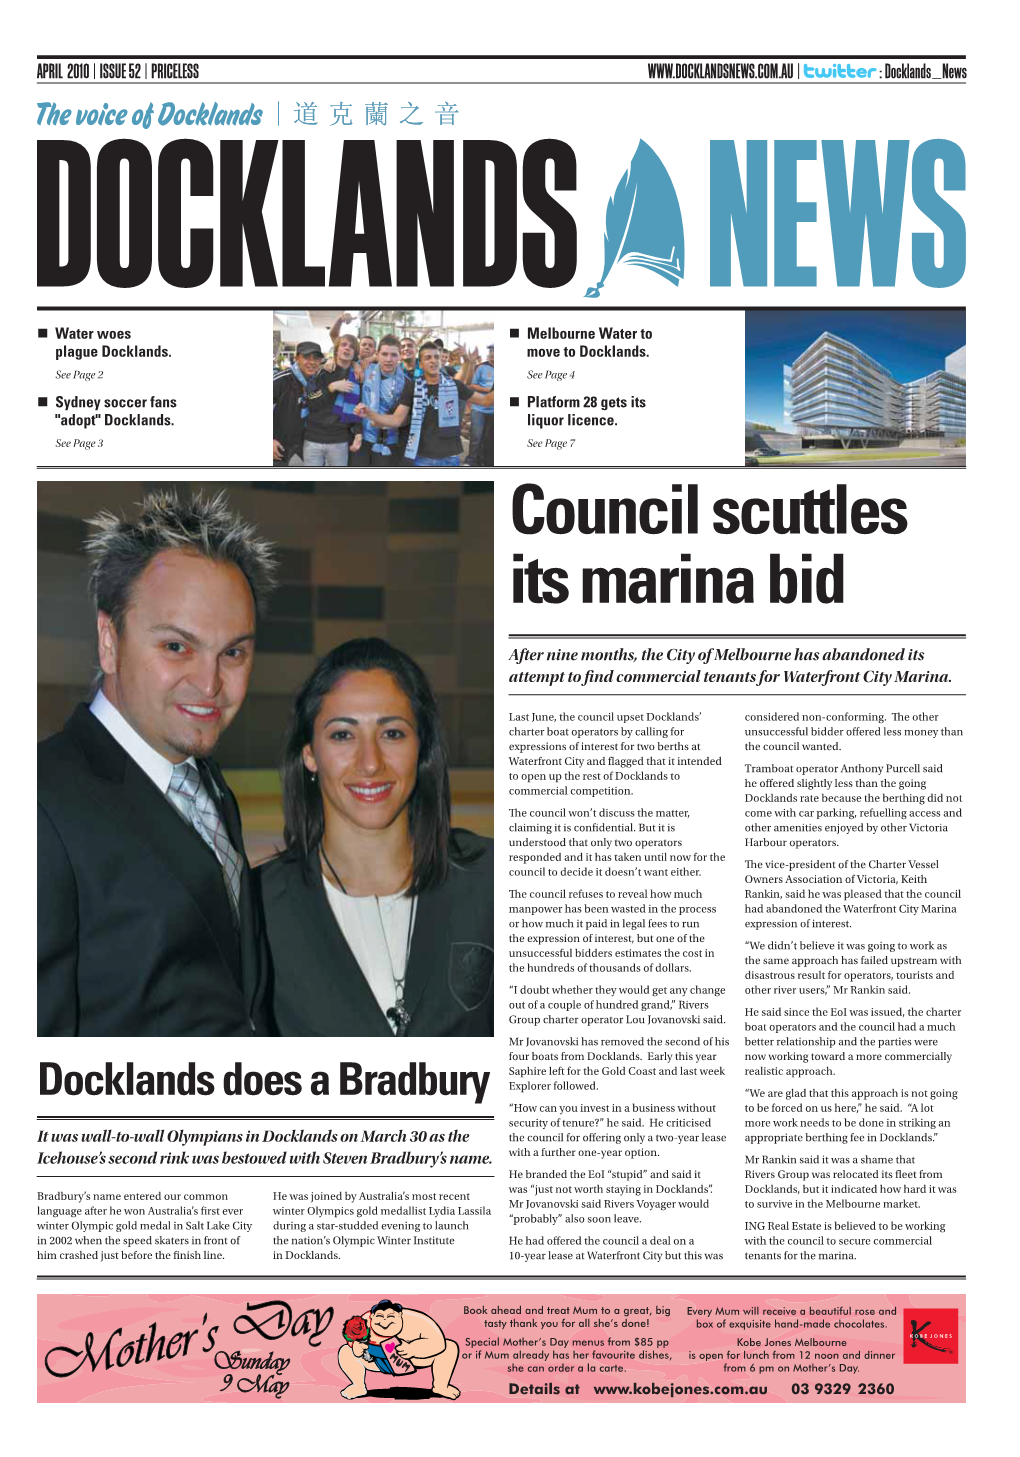 Council Scuttles Its Marina Bid